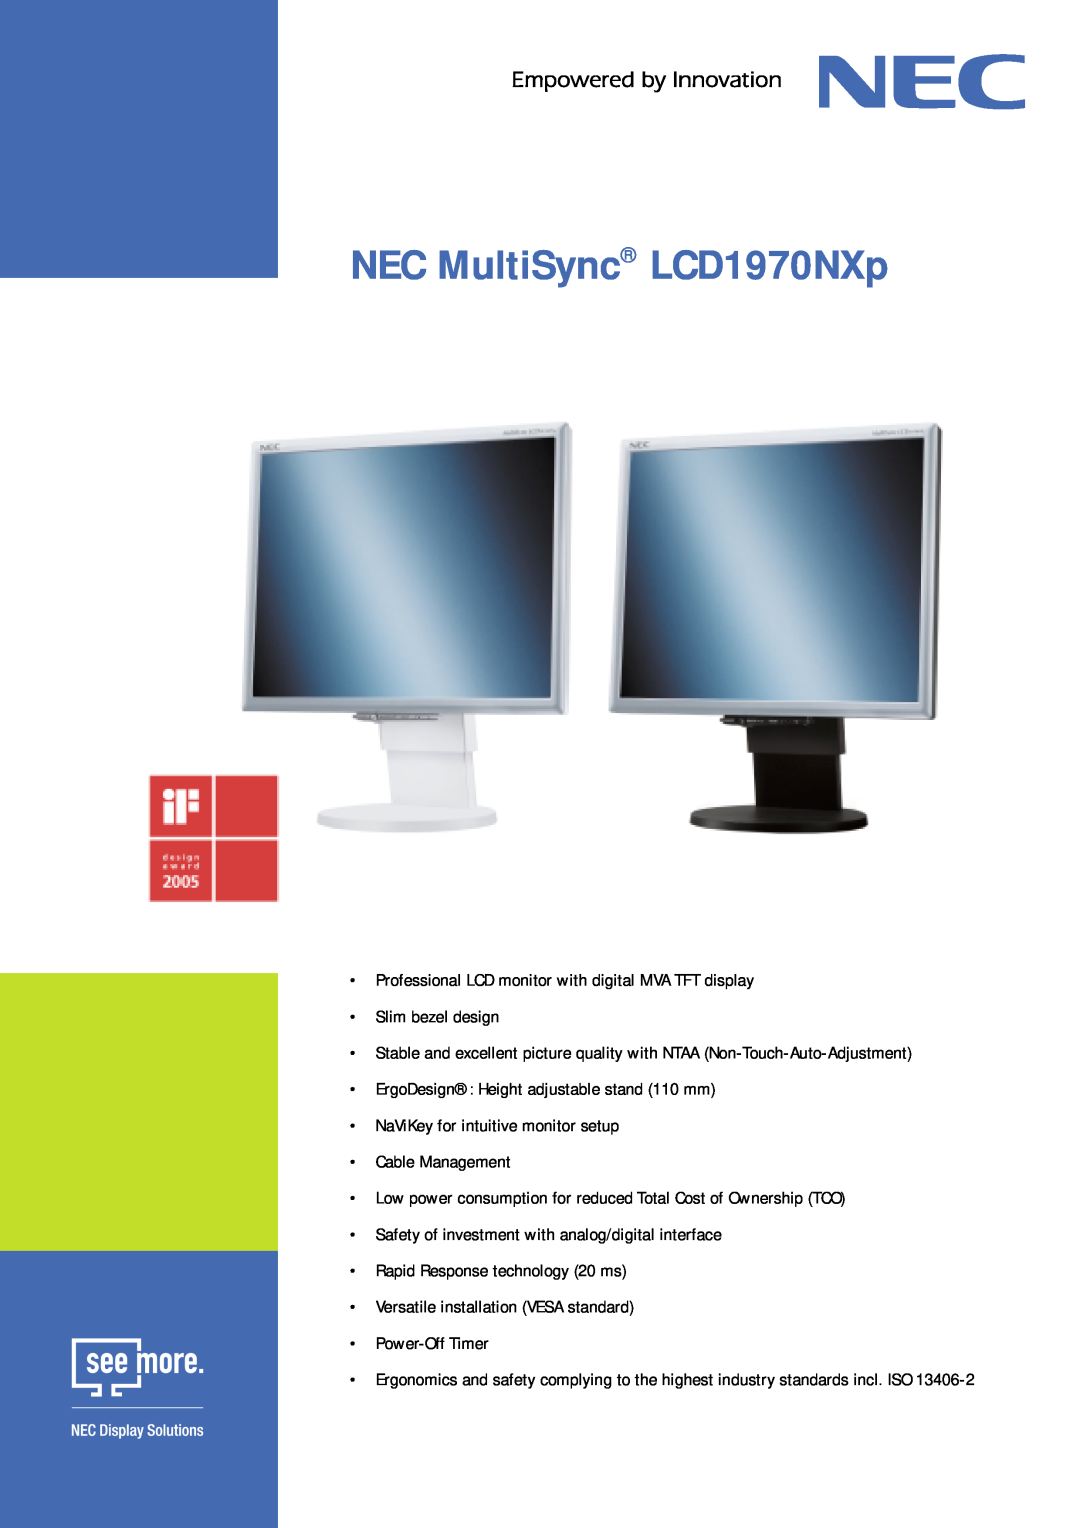 NEC user manual MultiSync LCD1970VX MultiSync LCD1970NX MultiSync LCD1970NXp, User’s Manual 